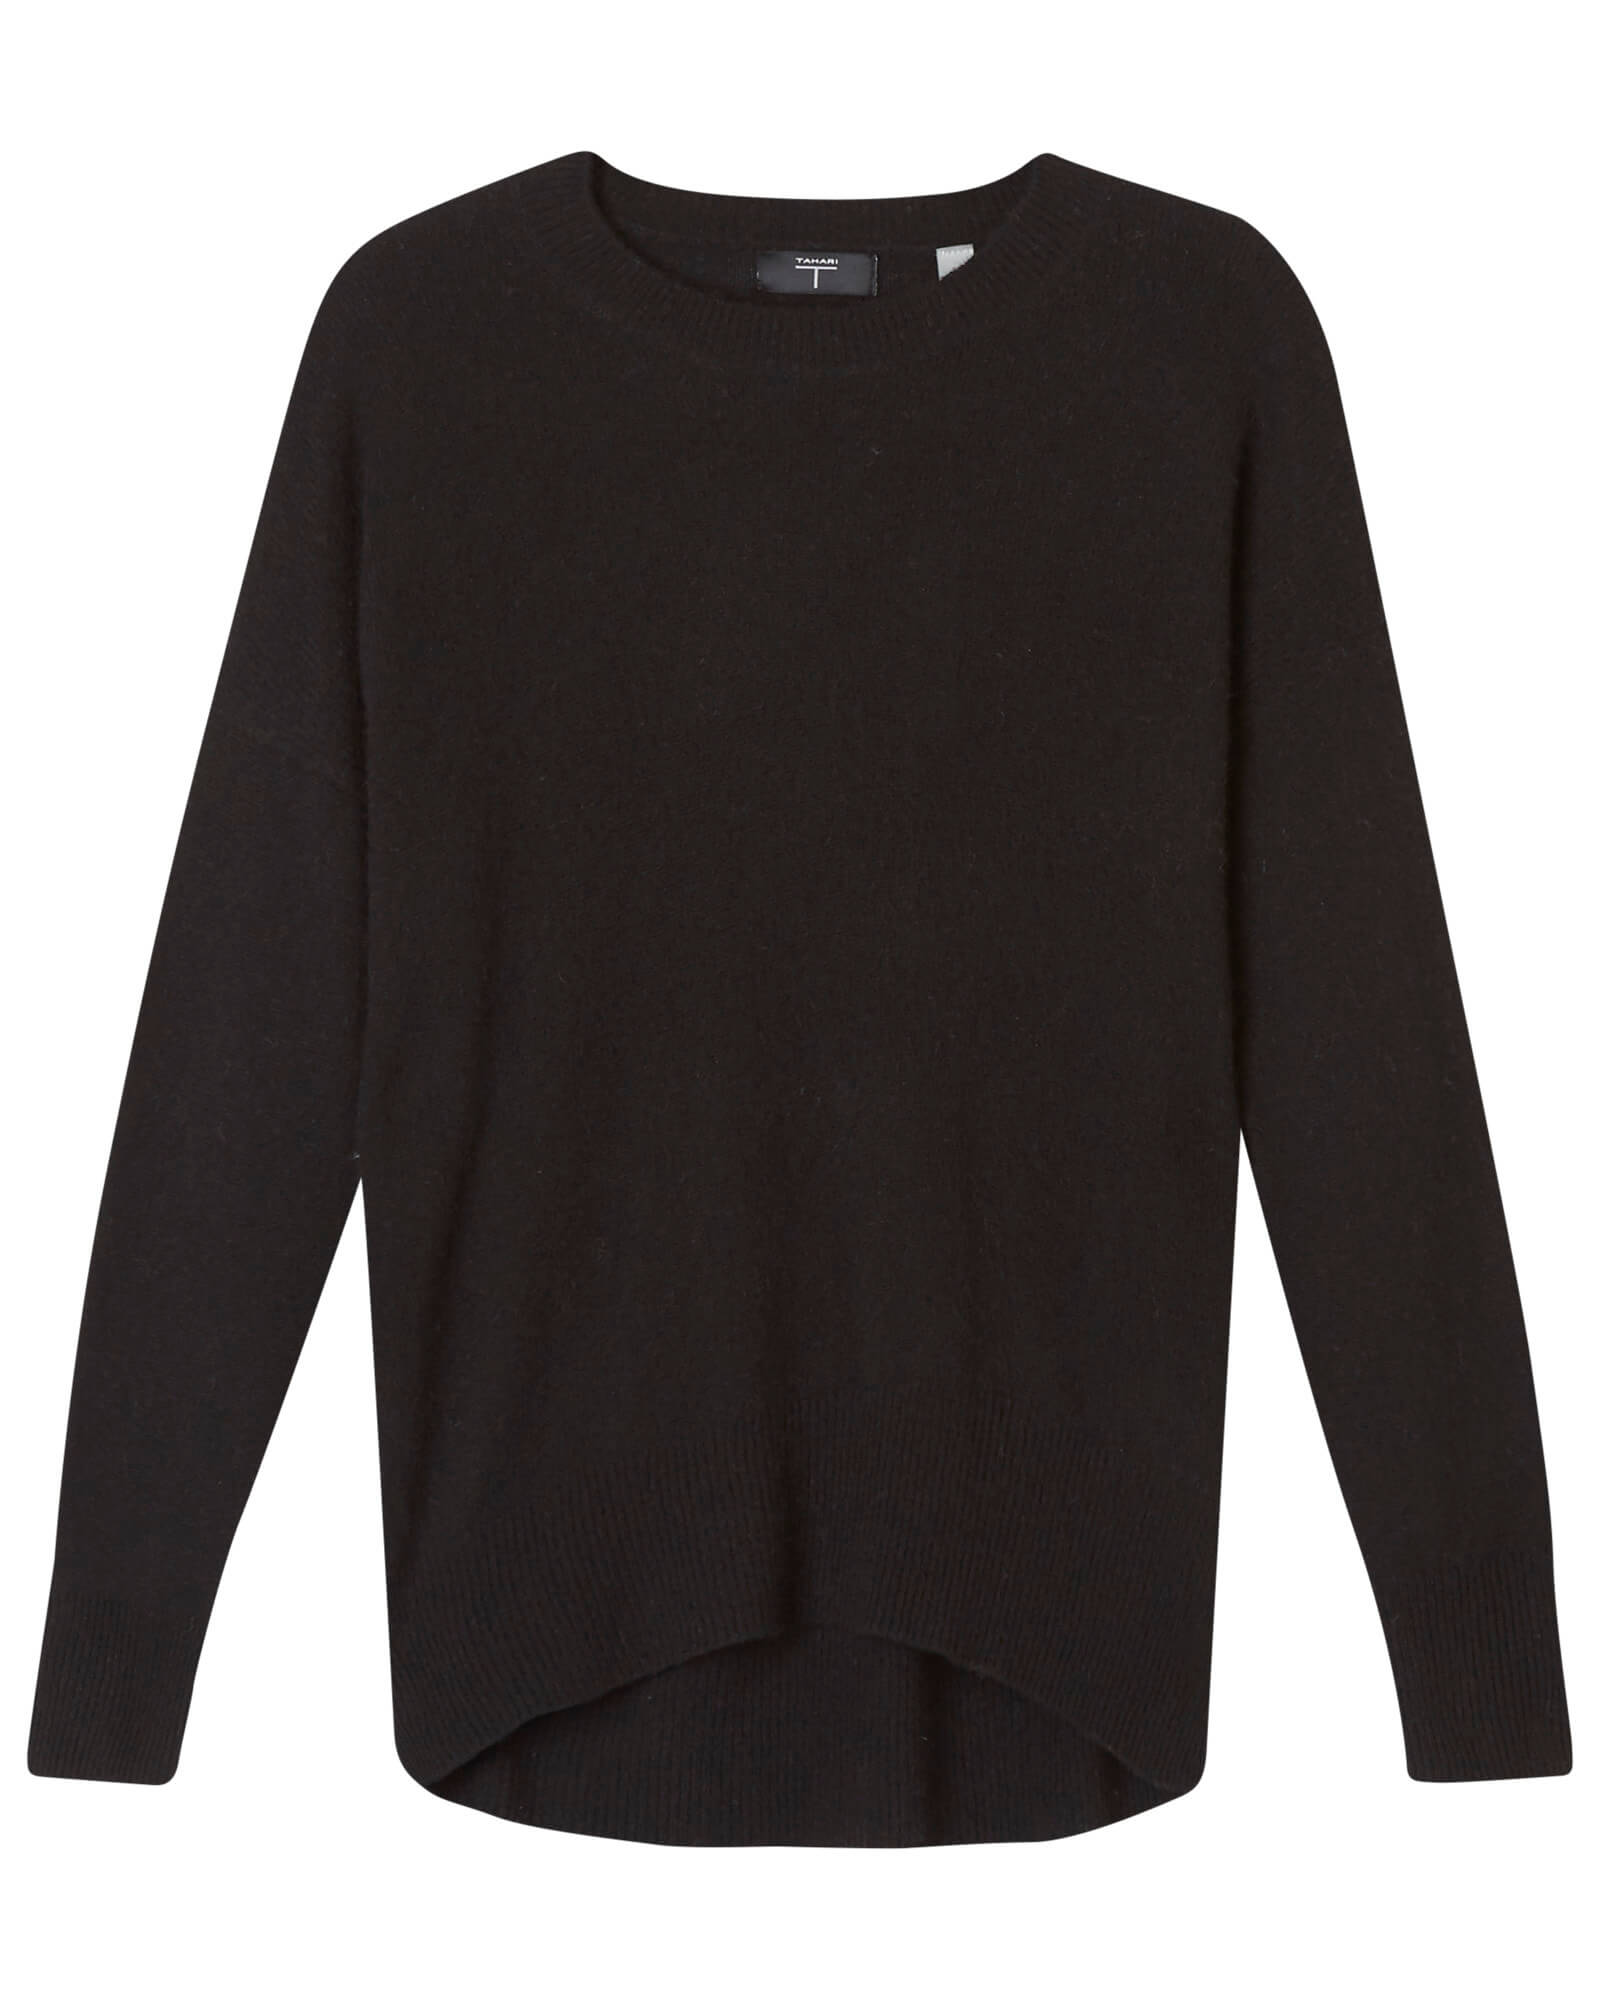 T Tahari Women's Classic Cashmere Crewneck Sweater - Black